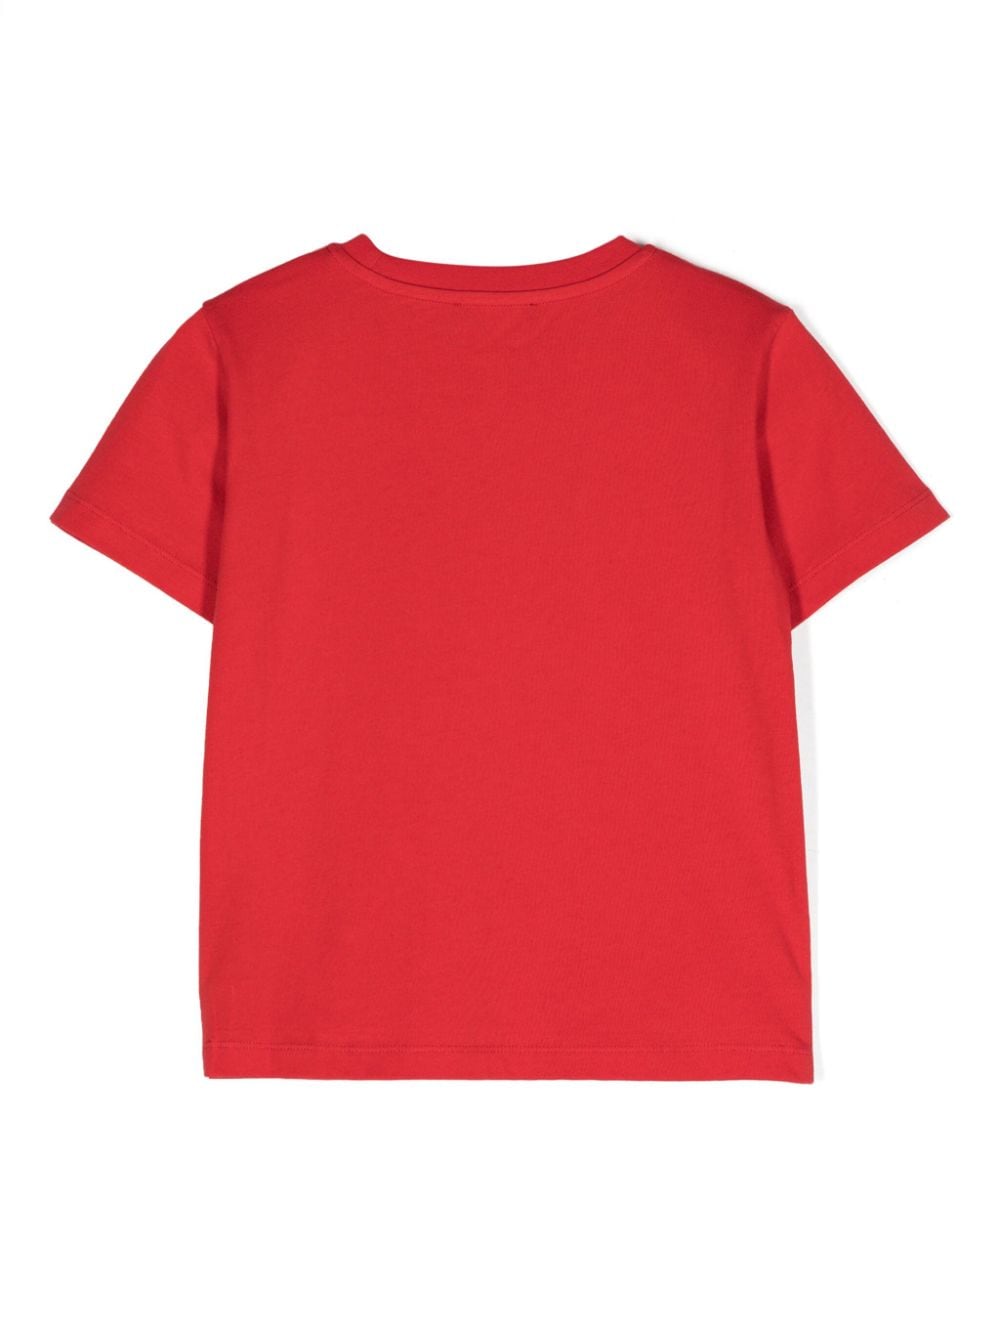 T-shirt per bambina in cotone rossa